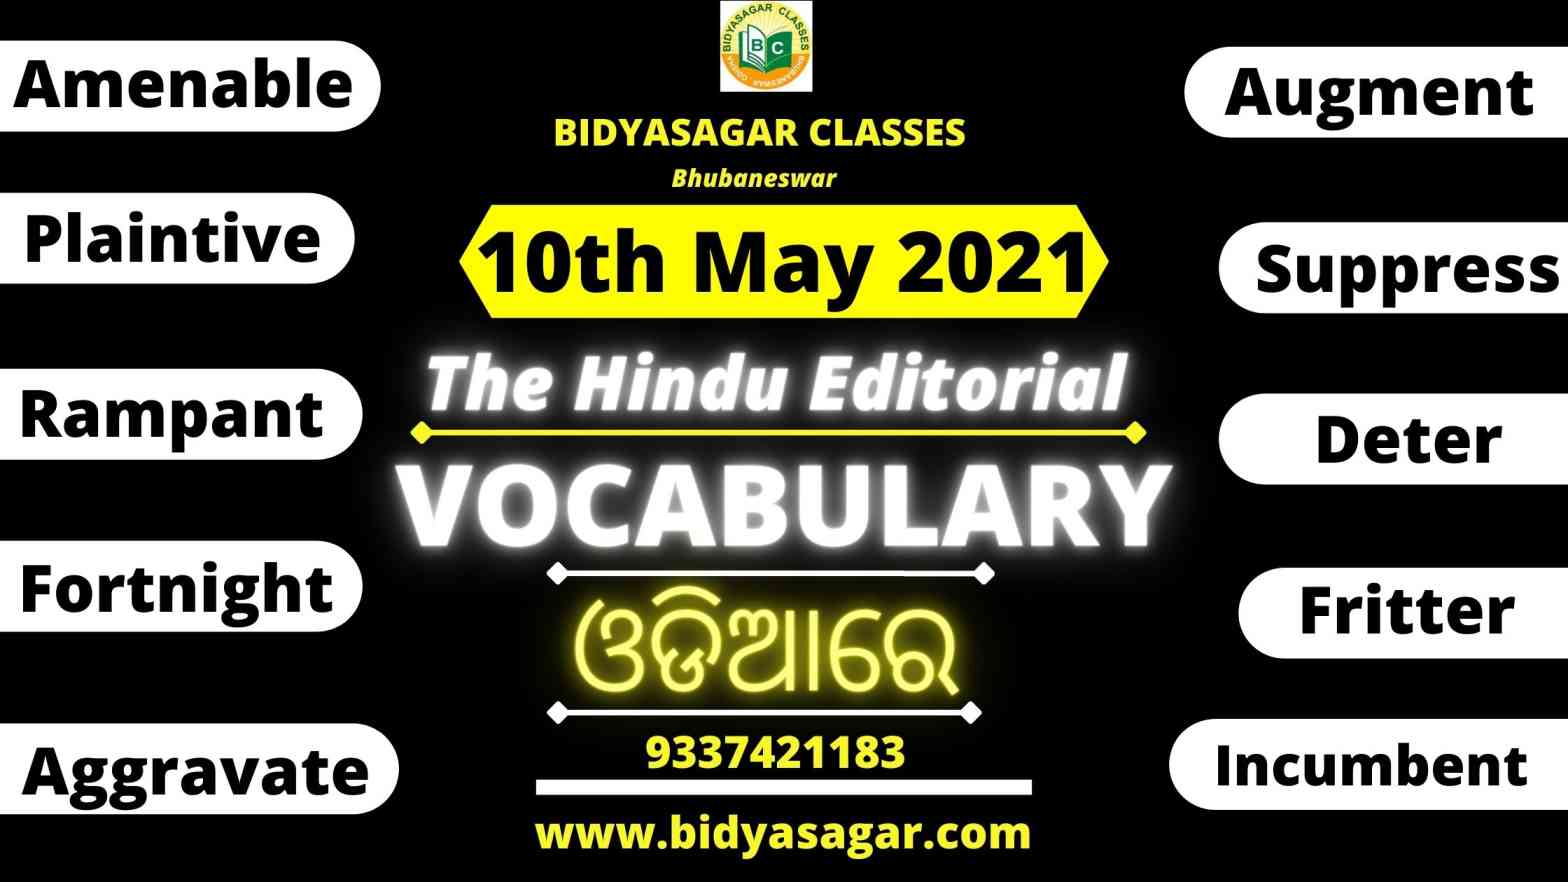 The Hindu Editorial Vocabulary of 10th May 2021